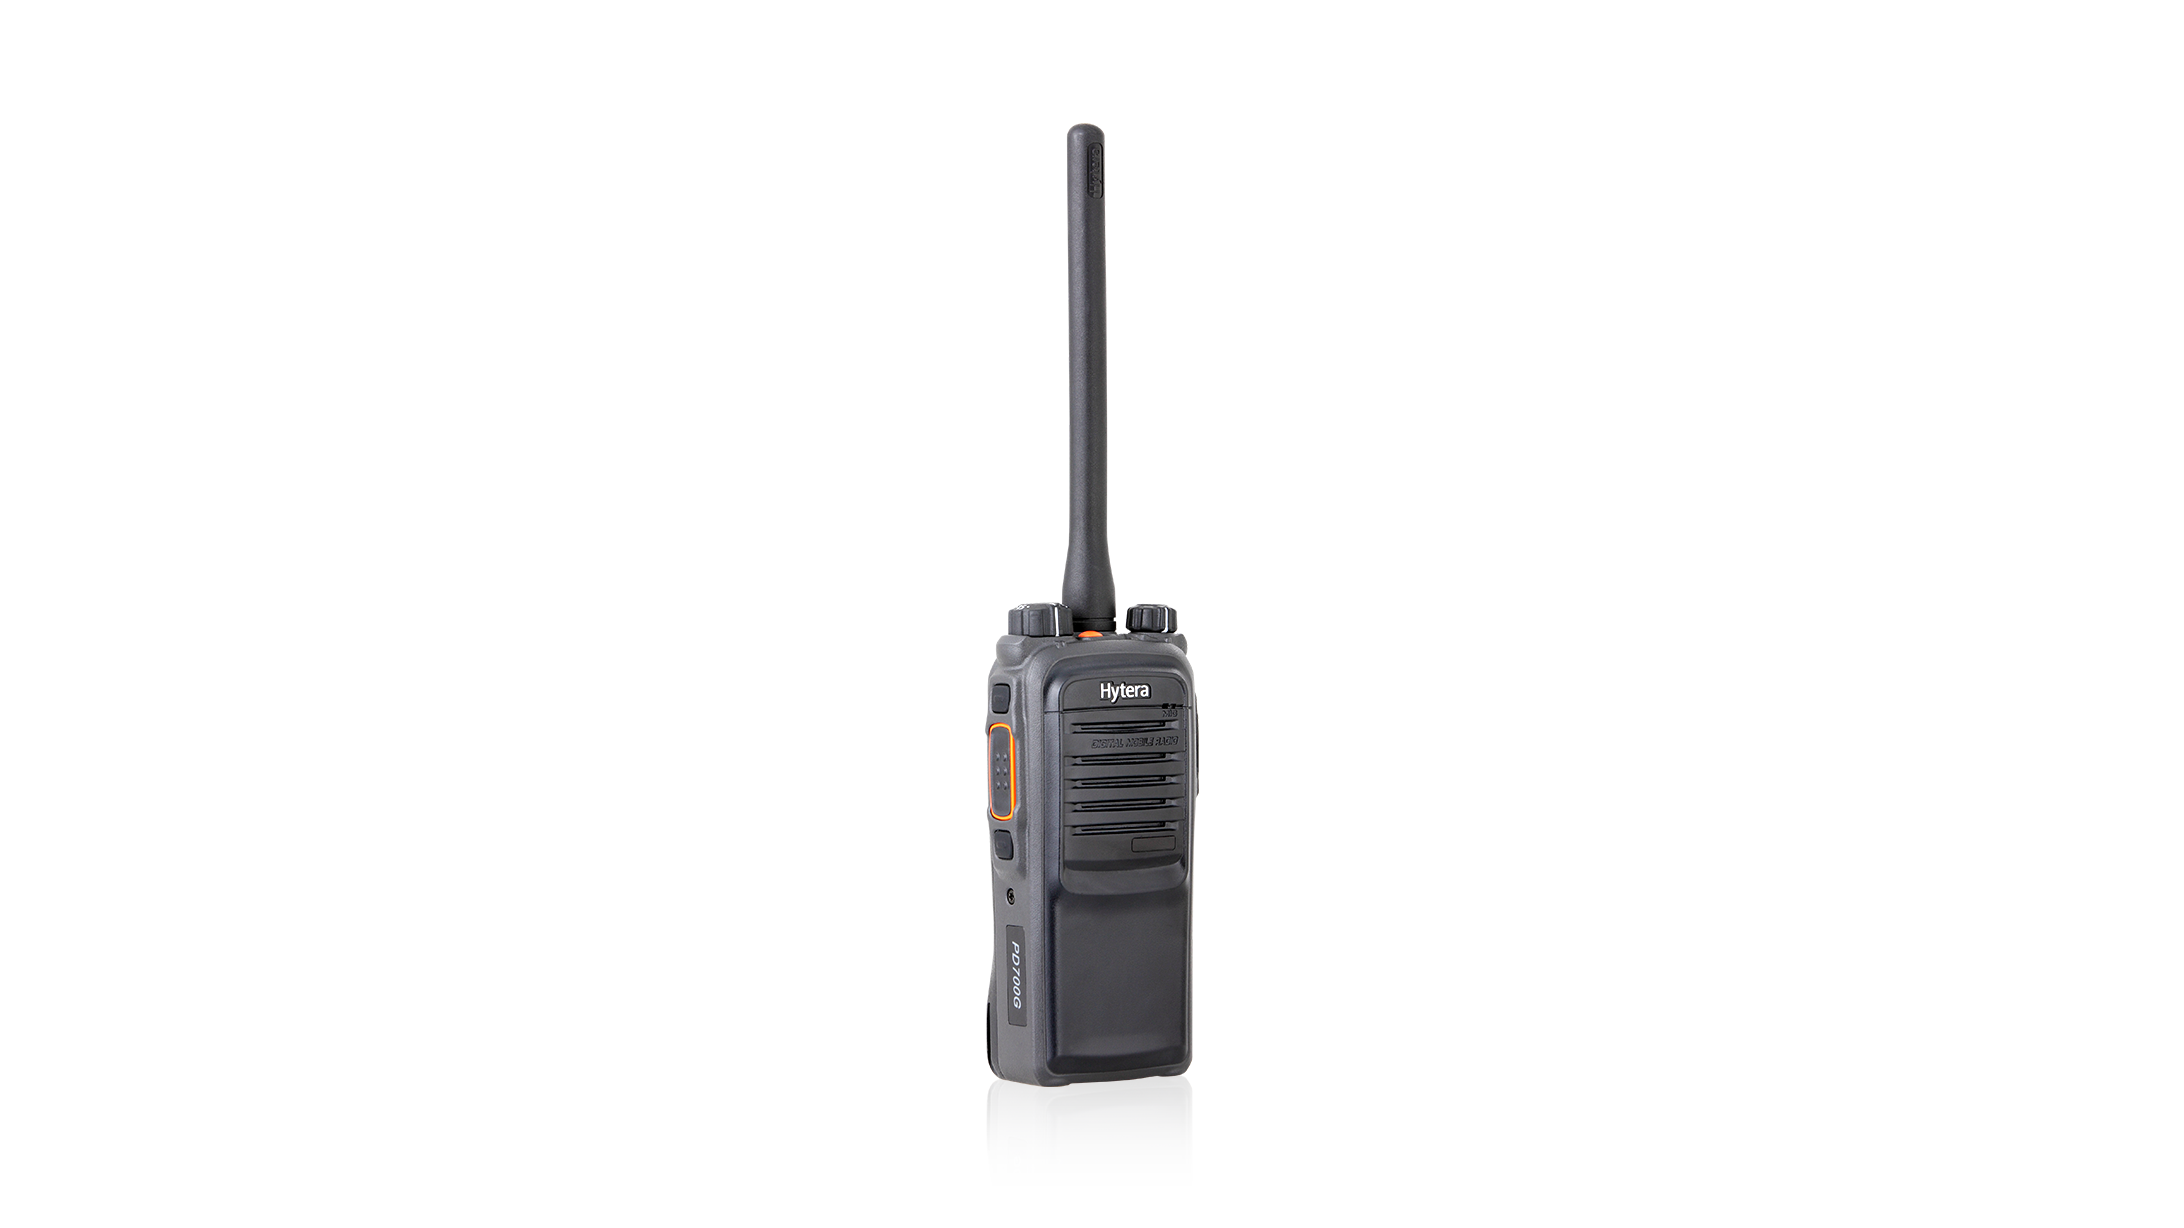 PD70X Professional DMR Portable Two-way radio